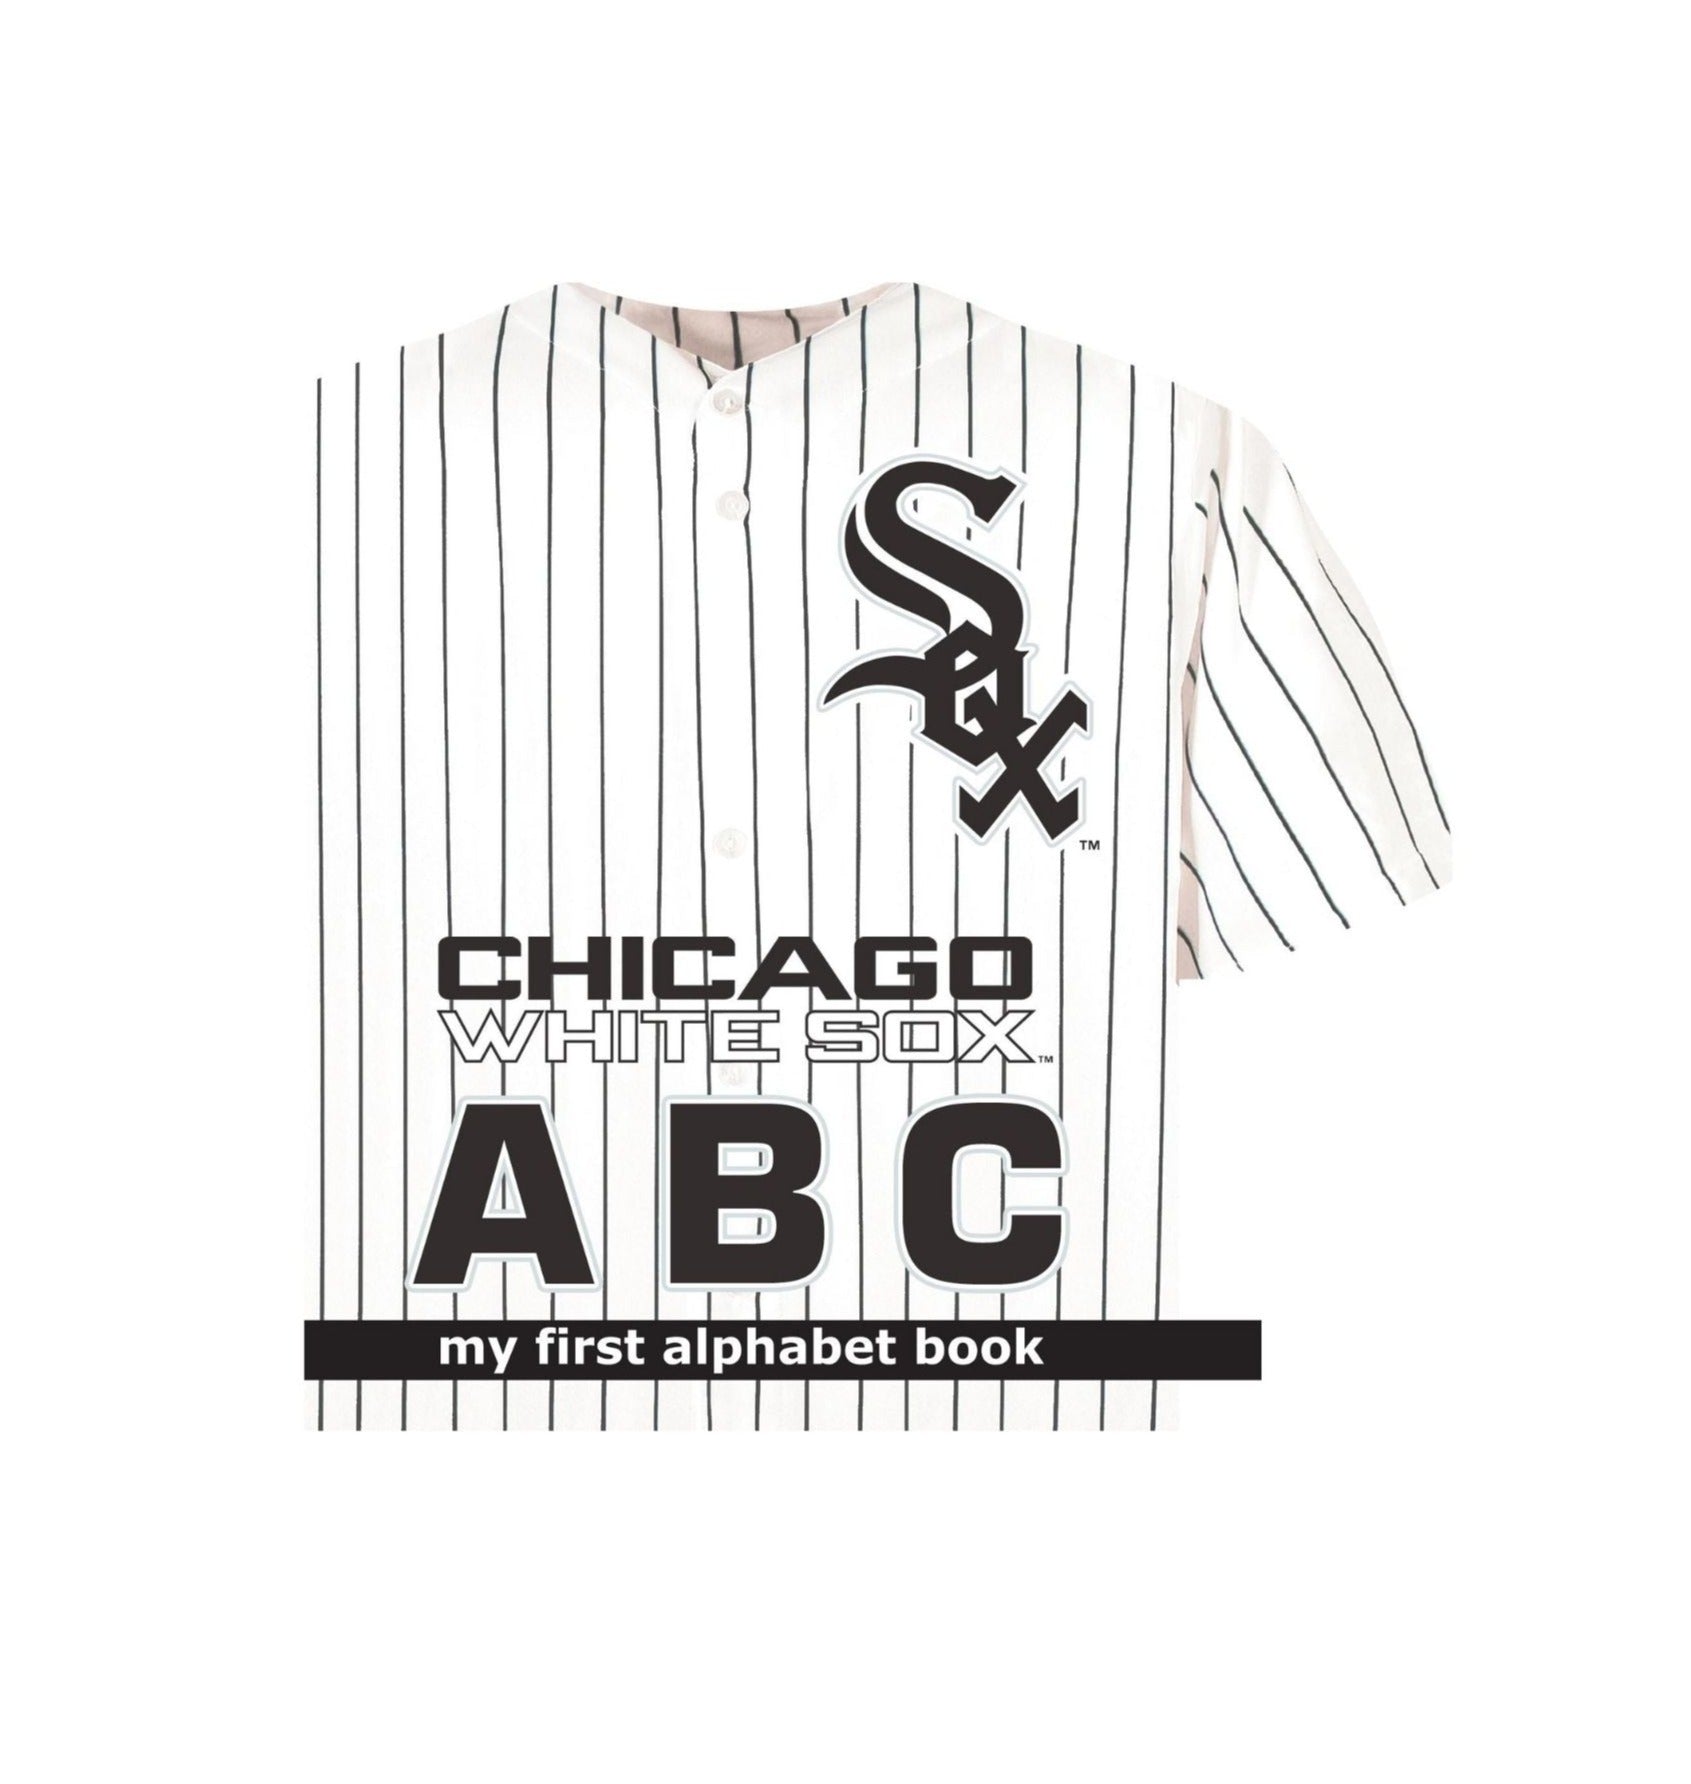 MLB Chicago White Sox Boys' White Pinstripe Pullover Jersey - XS